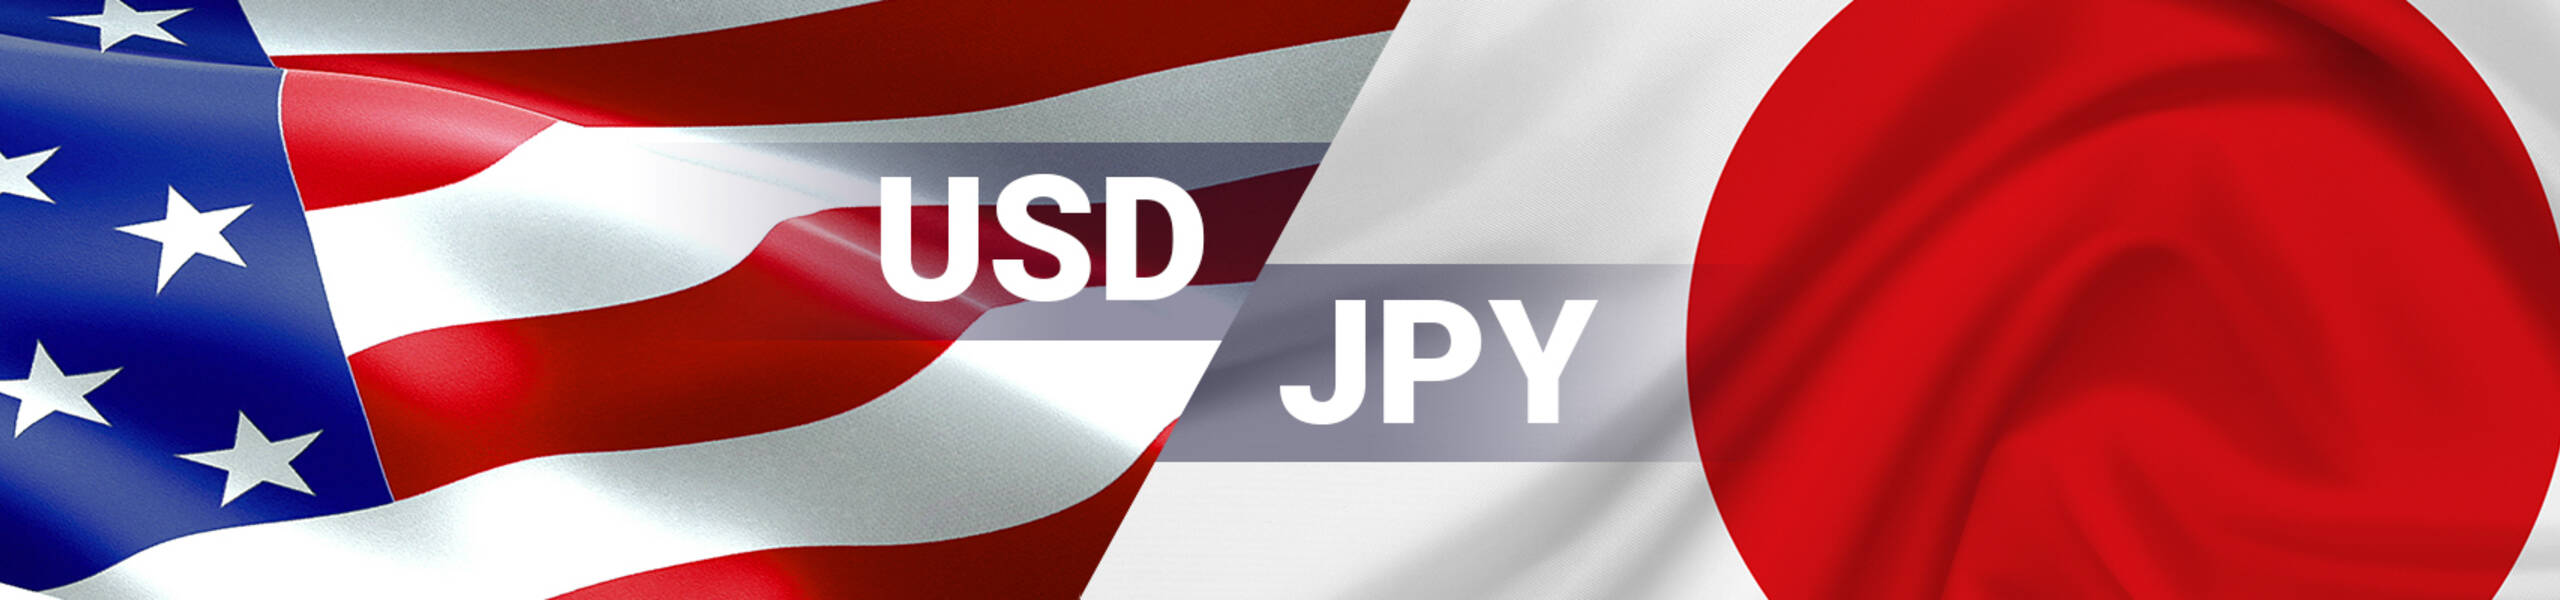 USD/JPY: dollar can’t breakout SSA’s resistance